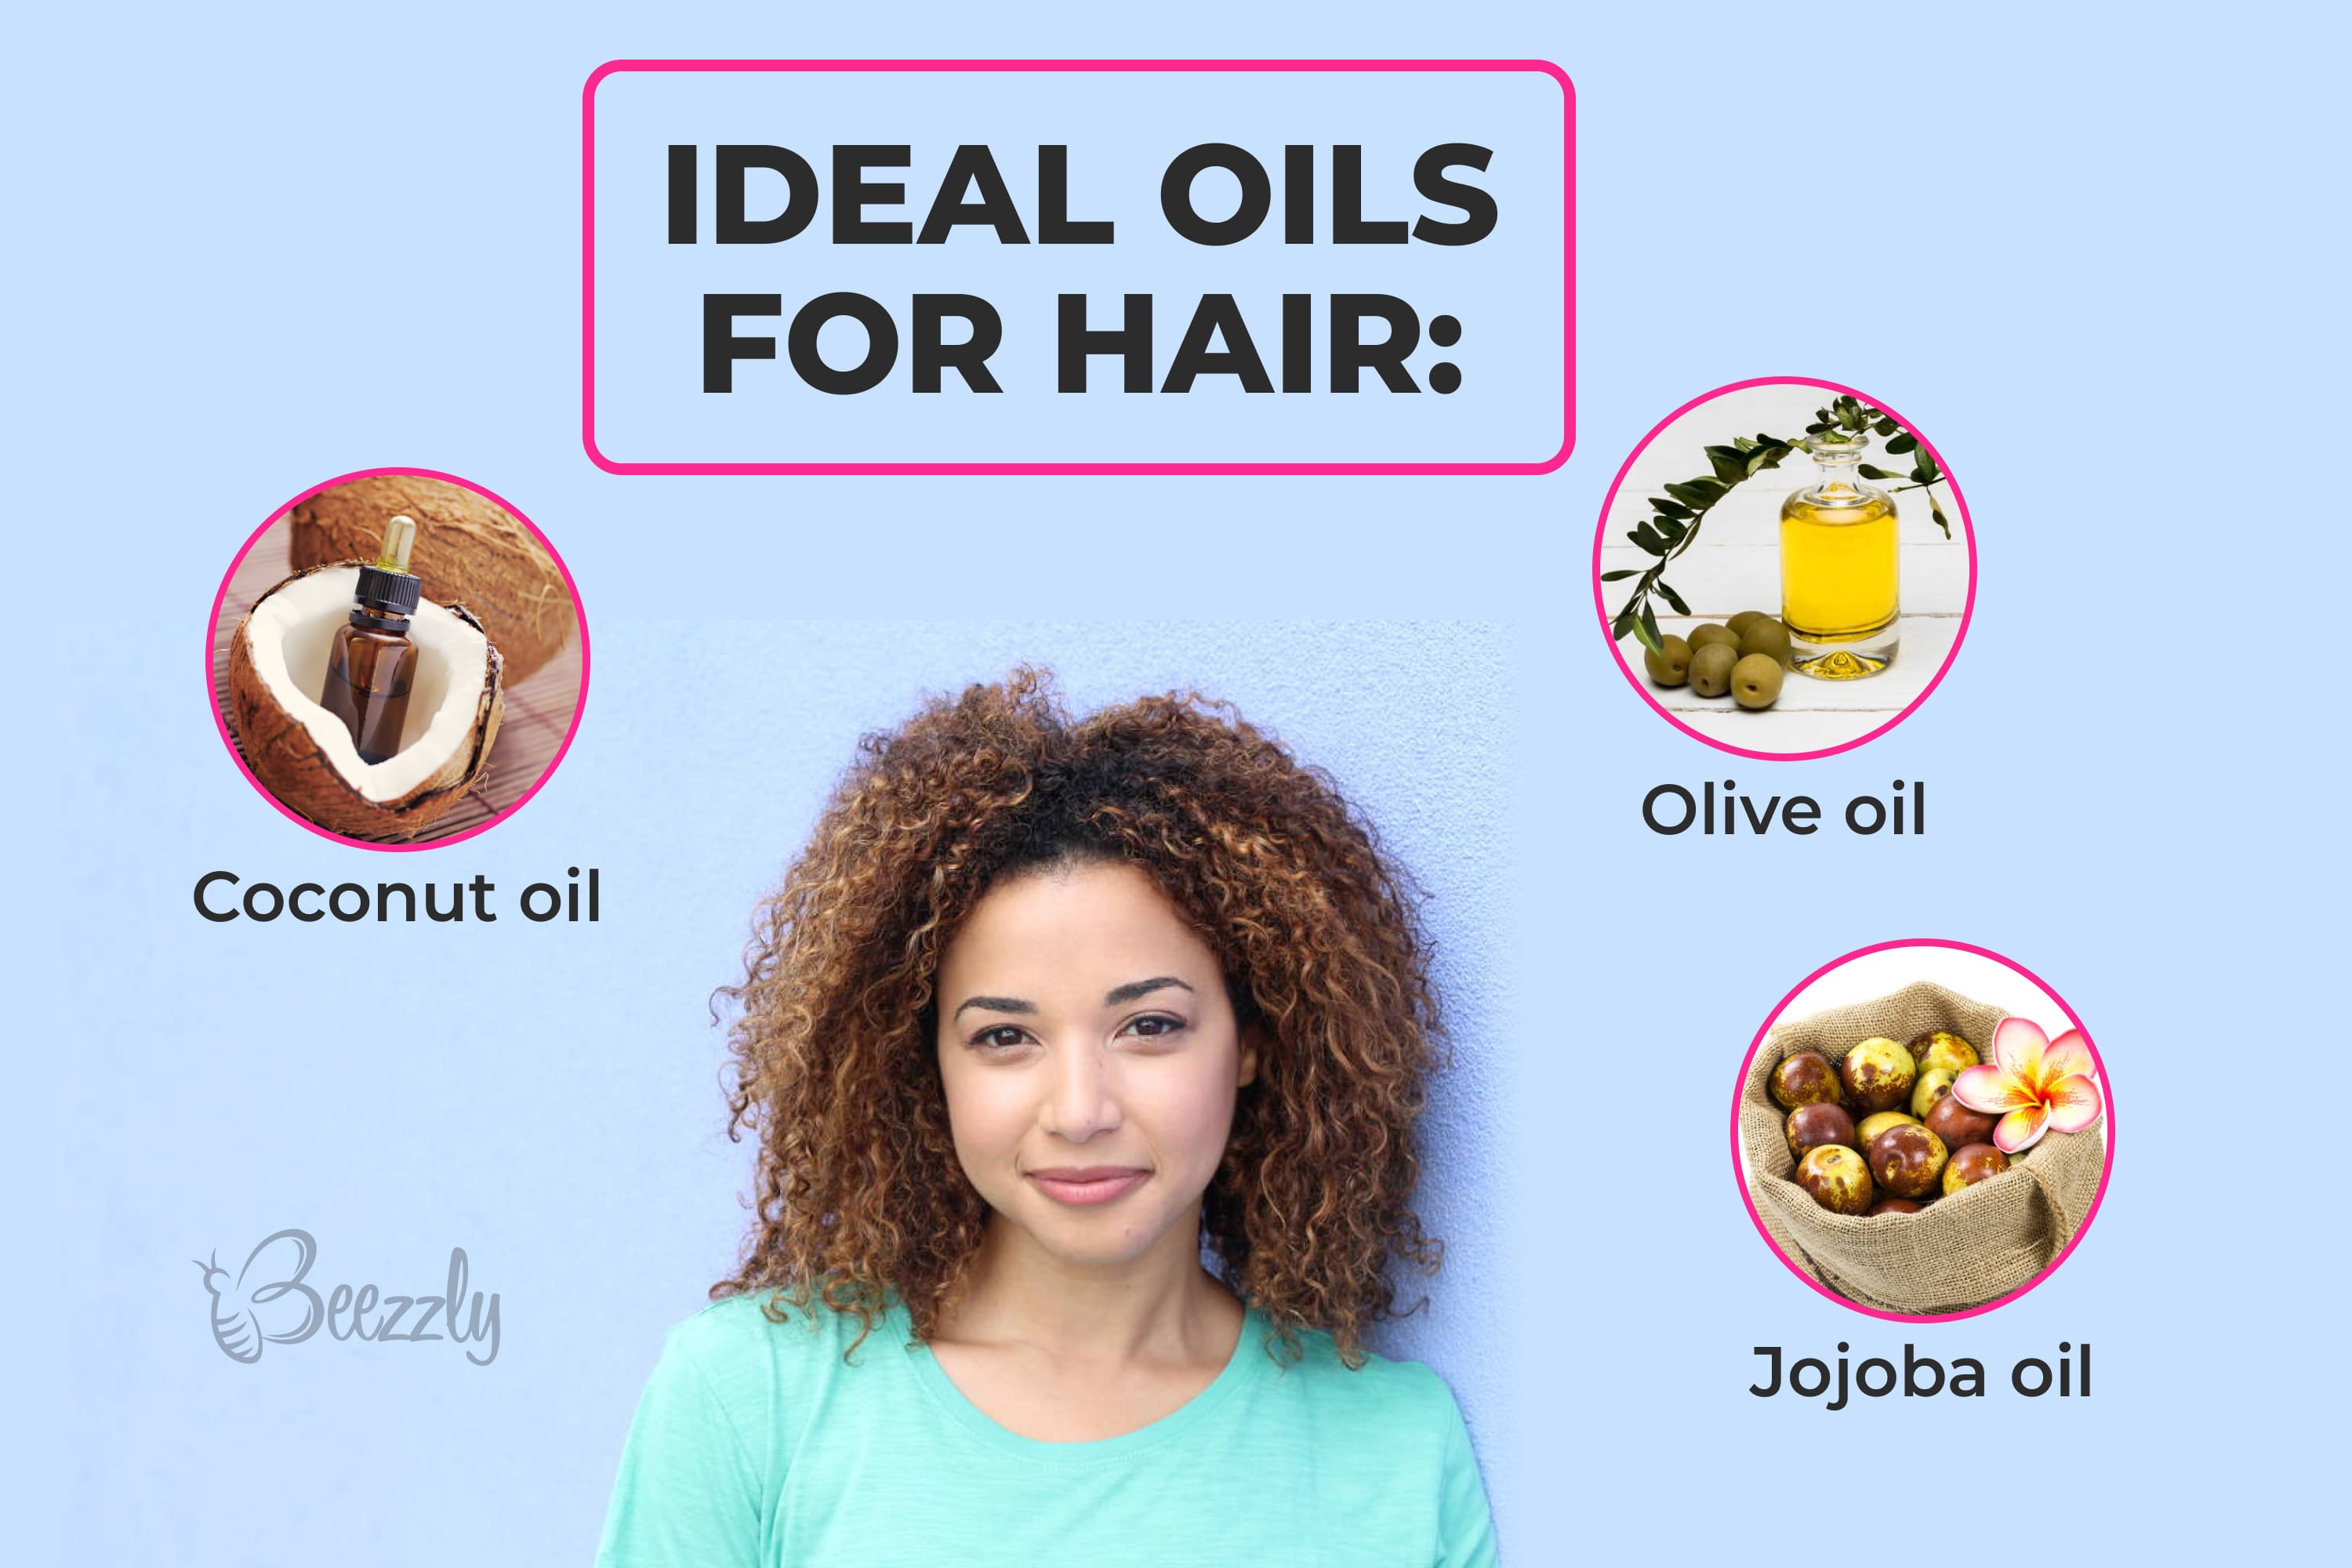 Ideal oils for hair